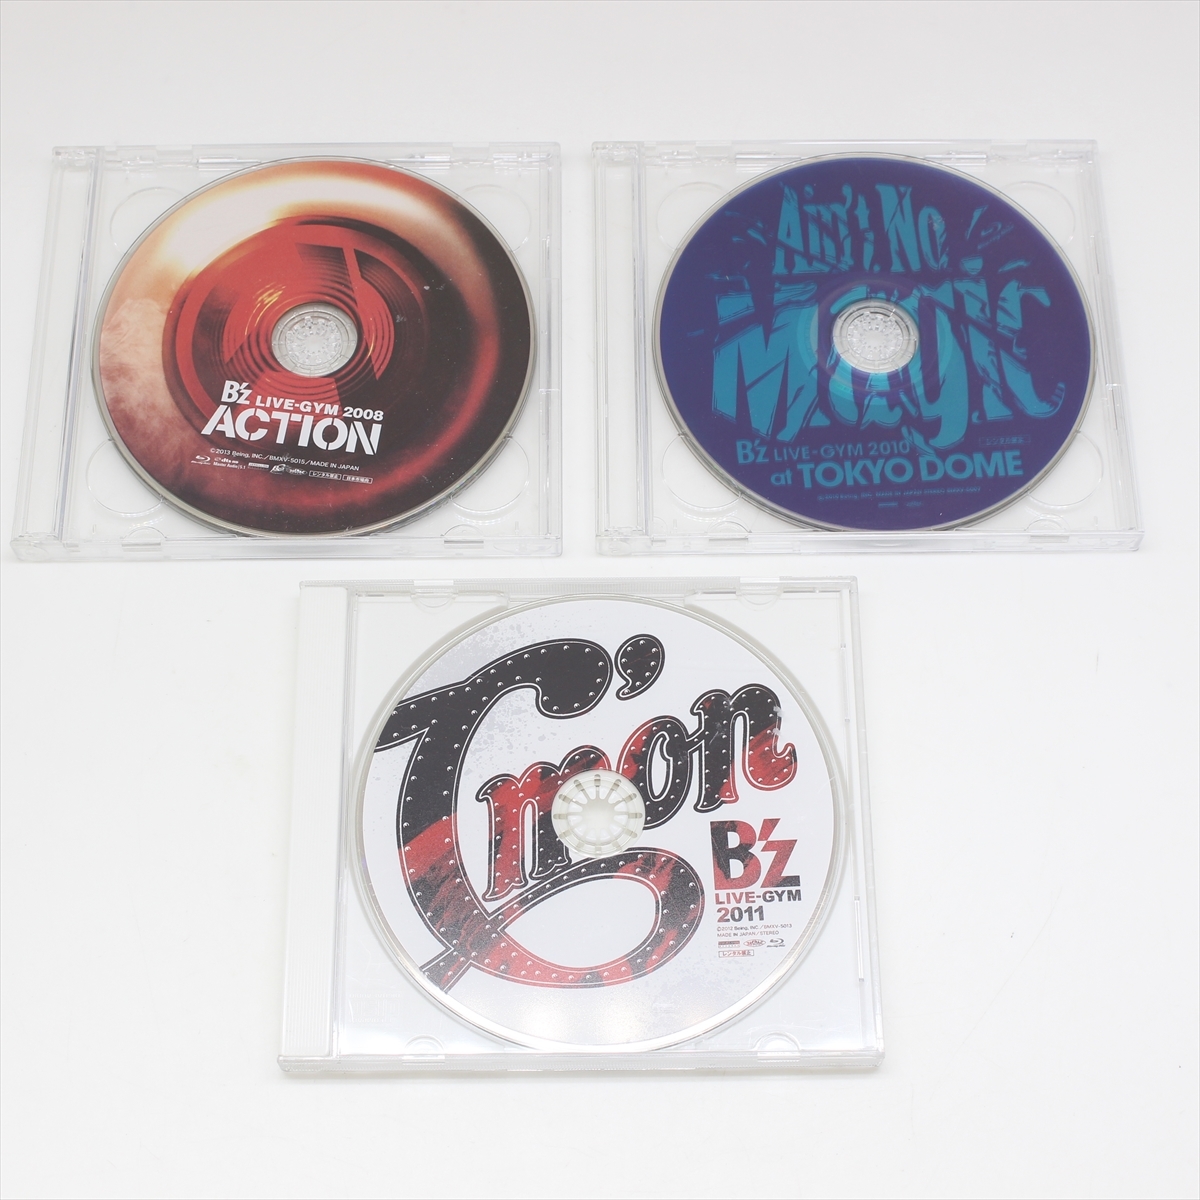 B'z ブルーレイ 5枚セット 稲葉浩志 松本孝弘 Blu-ray ライブ LIVE-GYM 2010 at TOKYO DOME / C'mon / ACTION / enⅡ / en Ⅲ _画像1